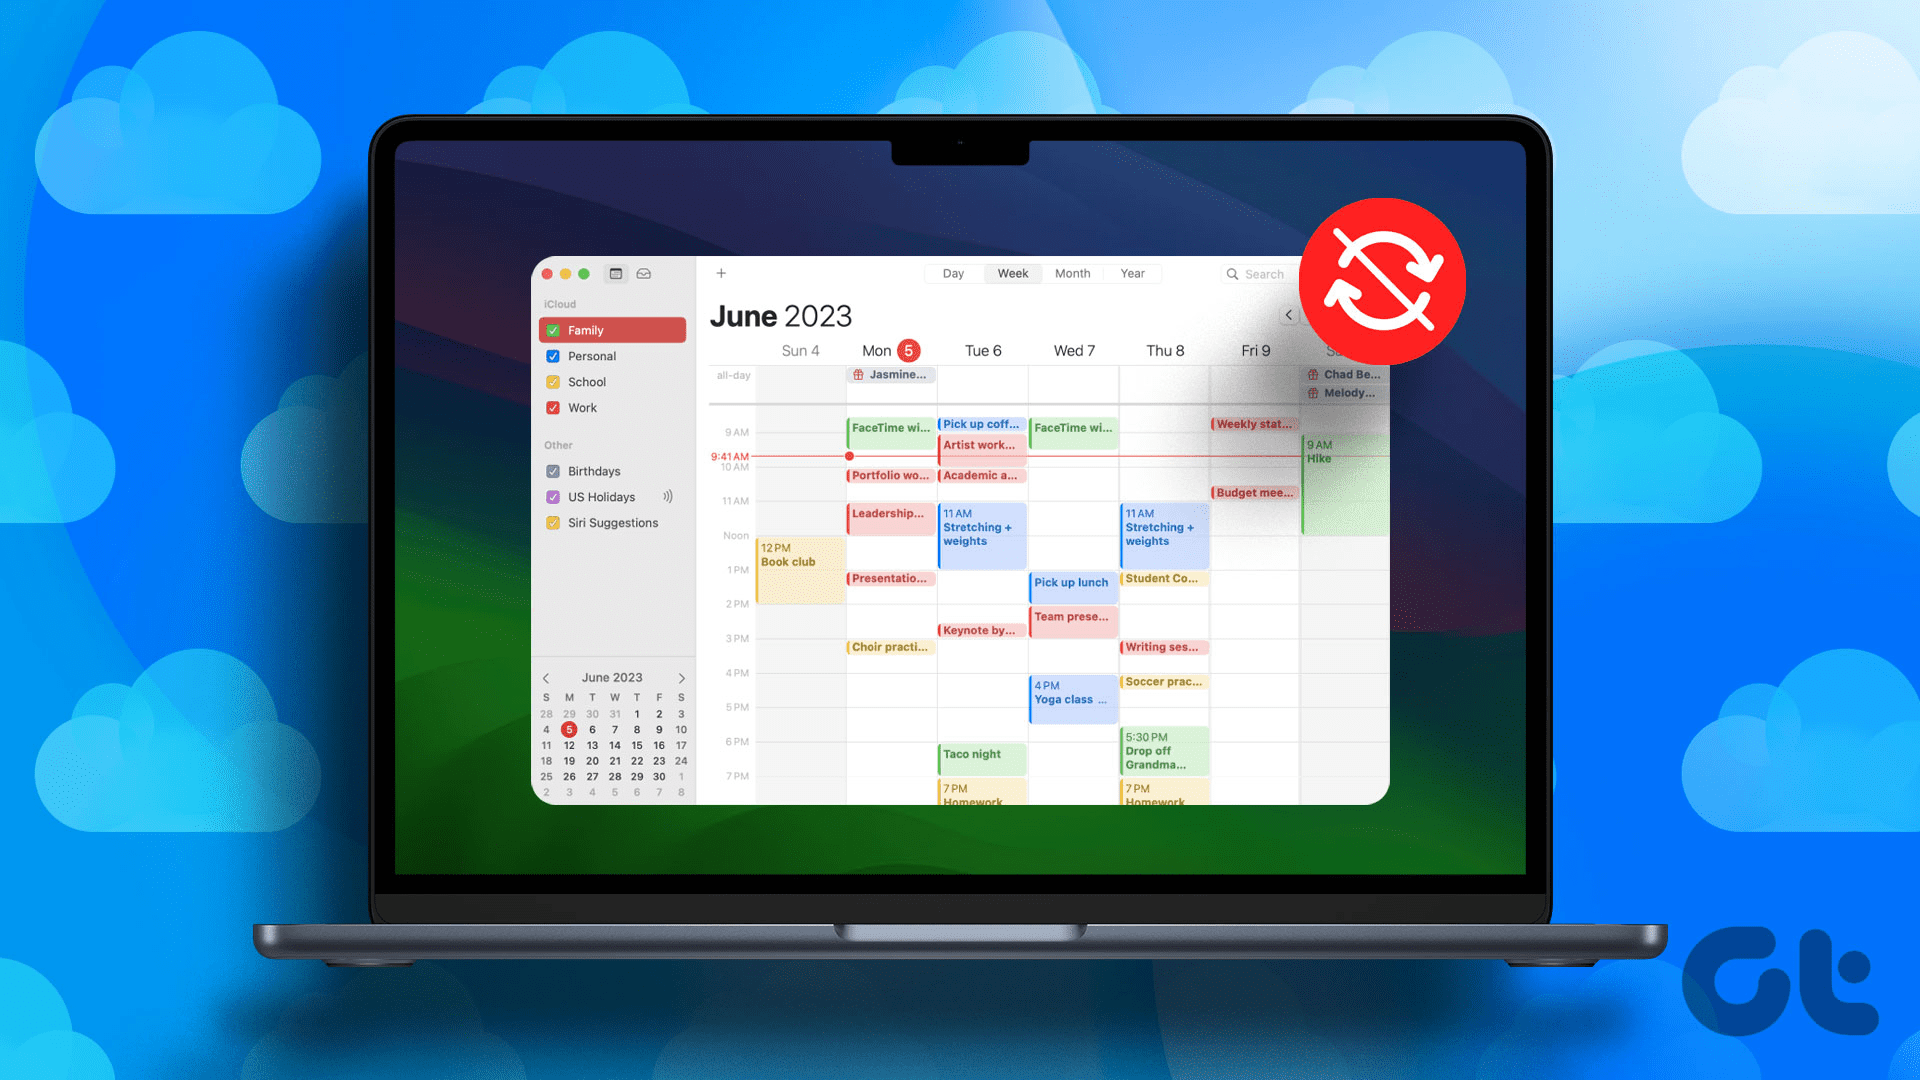 iCloud calendar not syncing with Mac